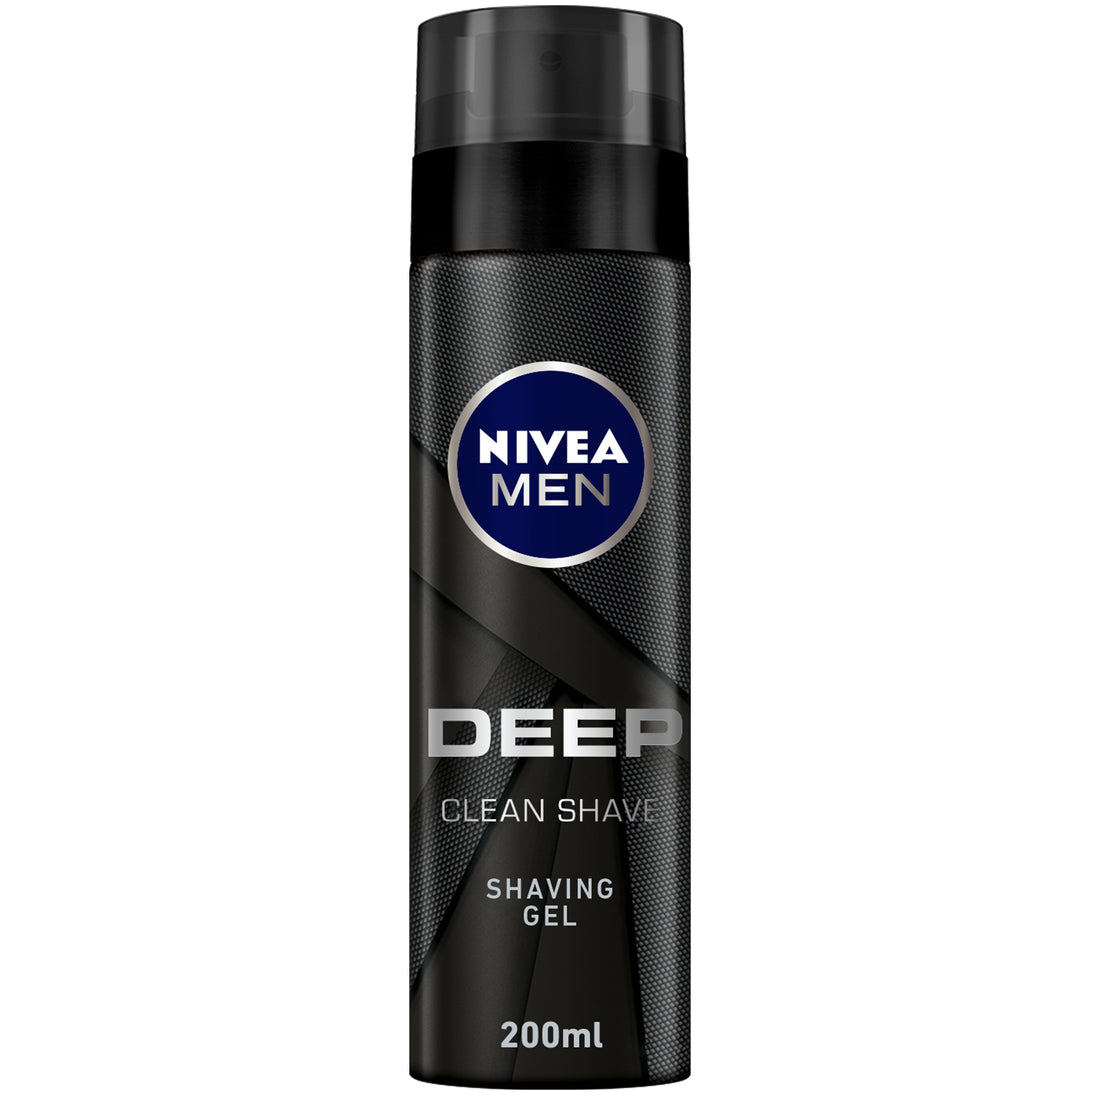 Nivea Men Deep Clean Shave Shaving Gel, Antibacterial Black Carbon, 200ml